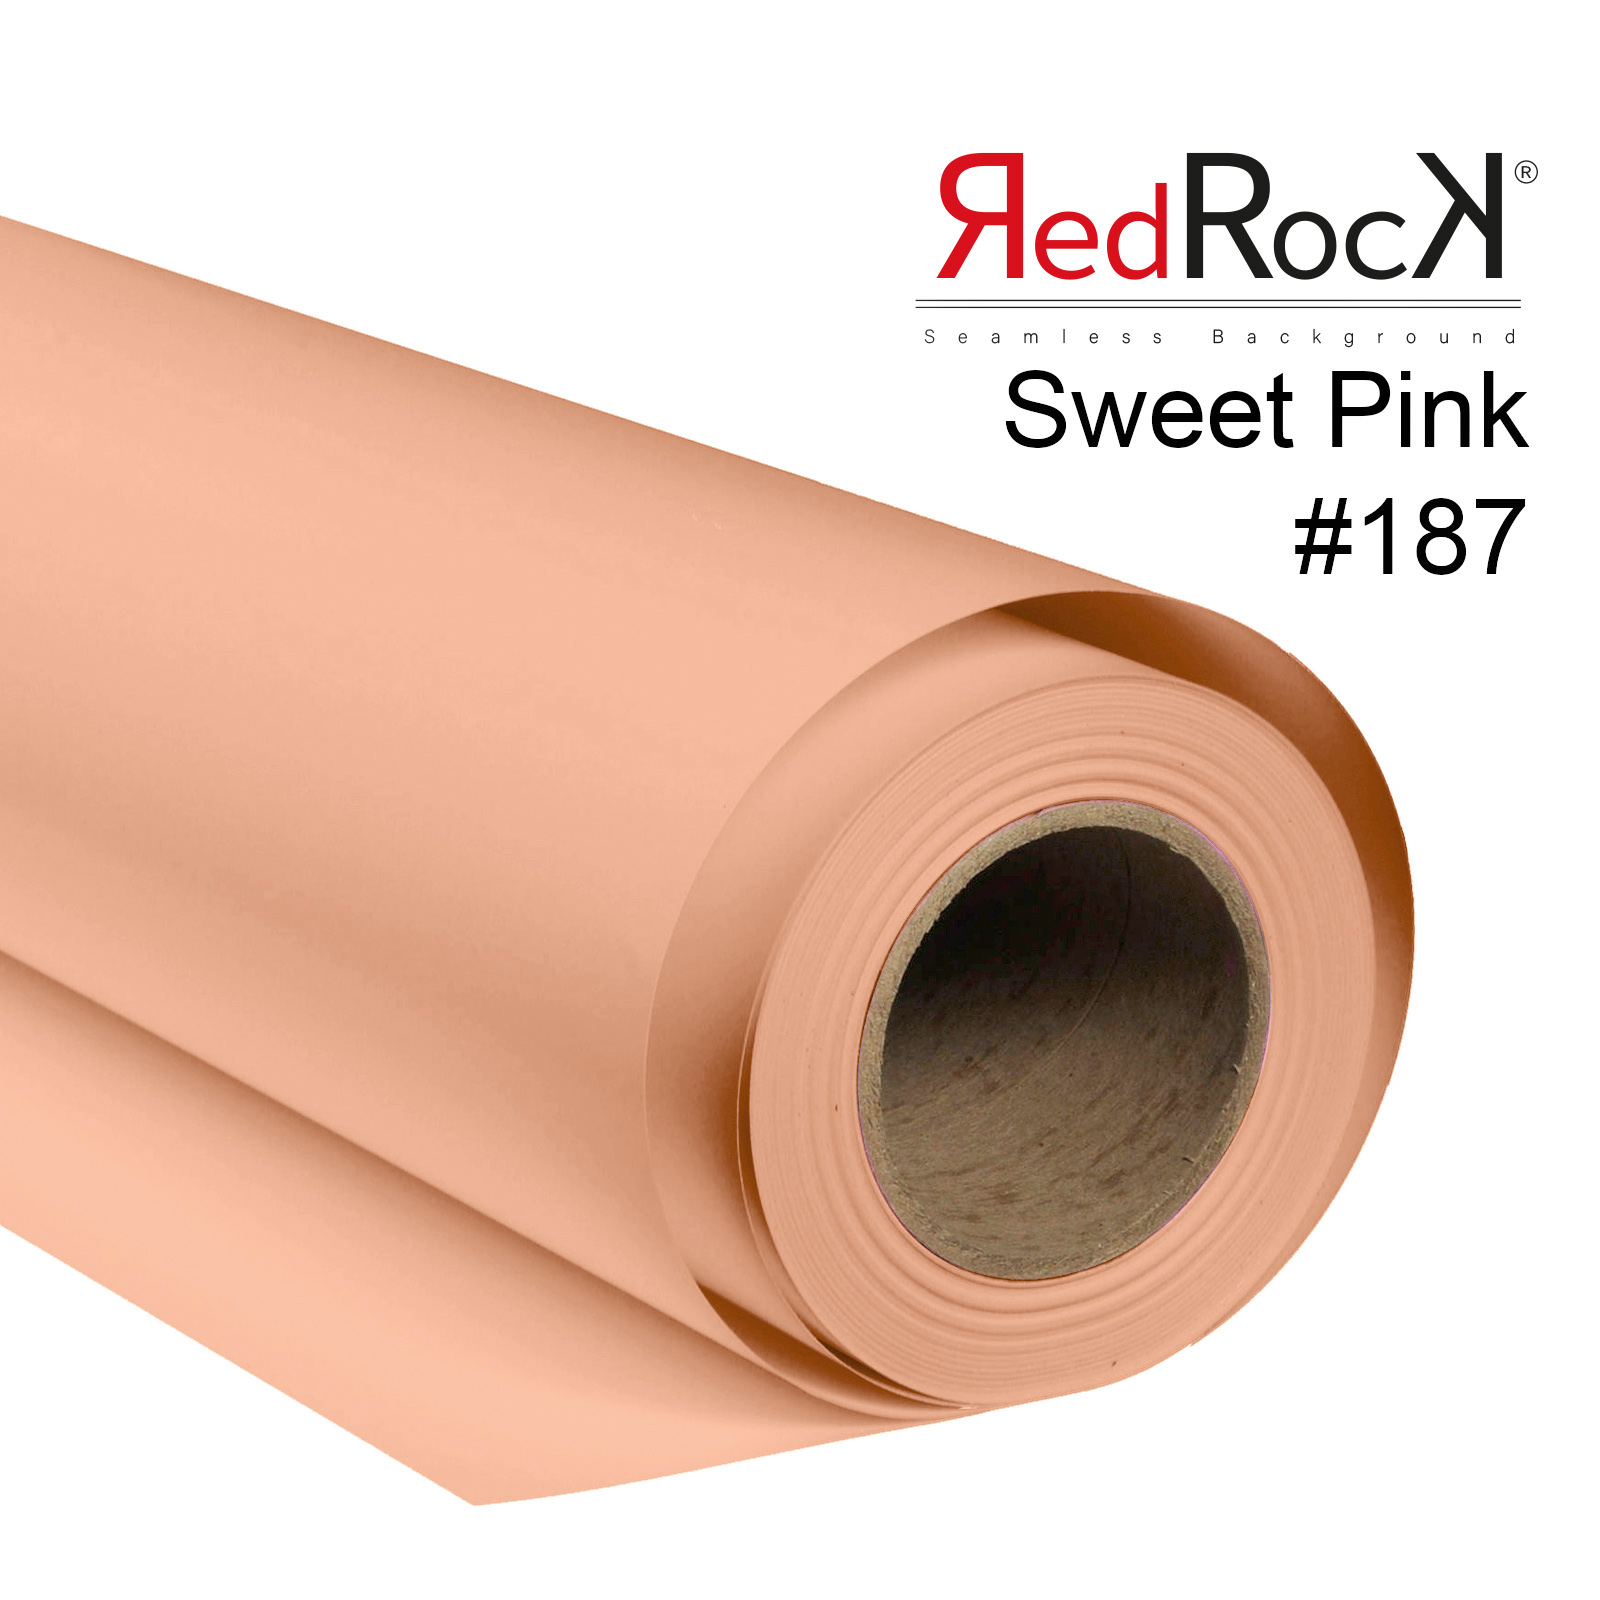 RedRock Sweet Pink Background Paper 2.72x10 m #187